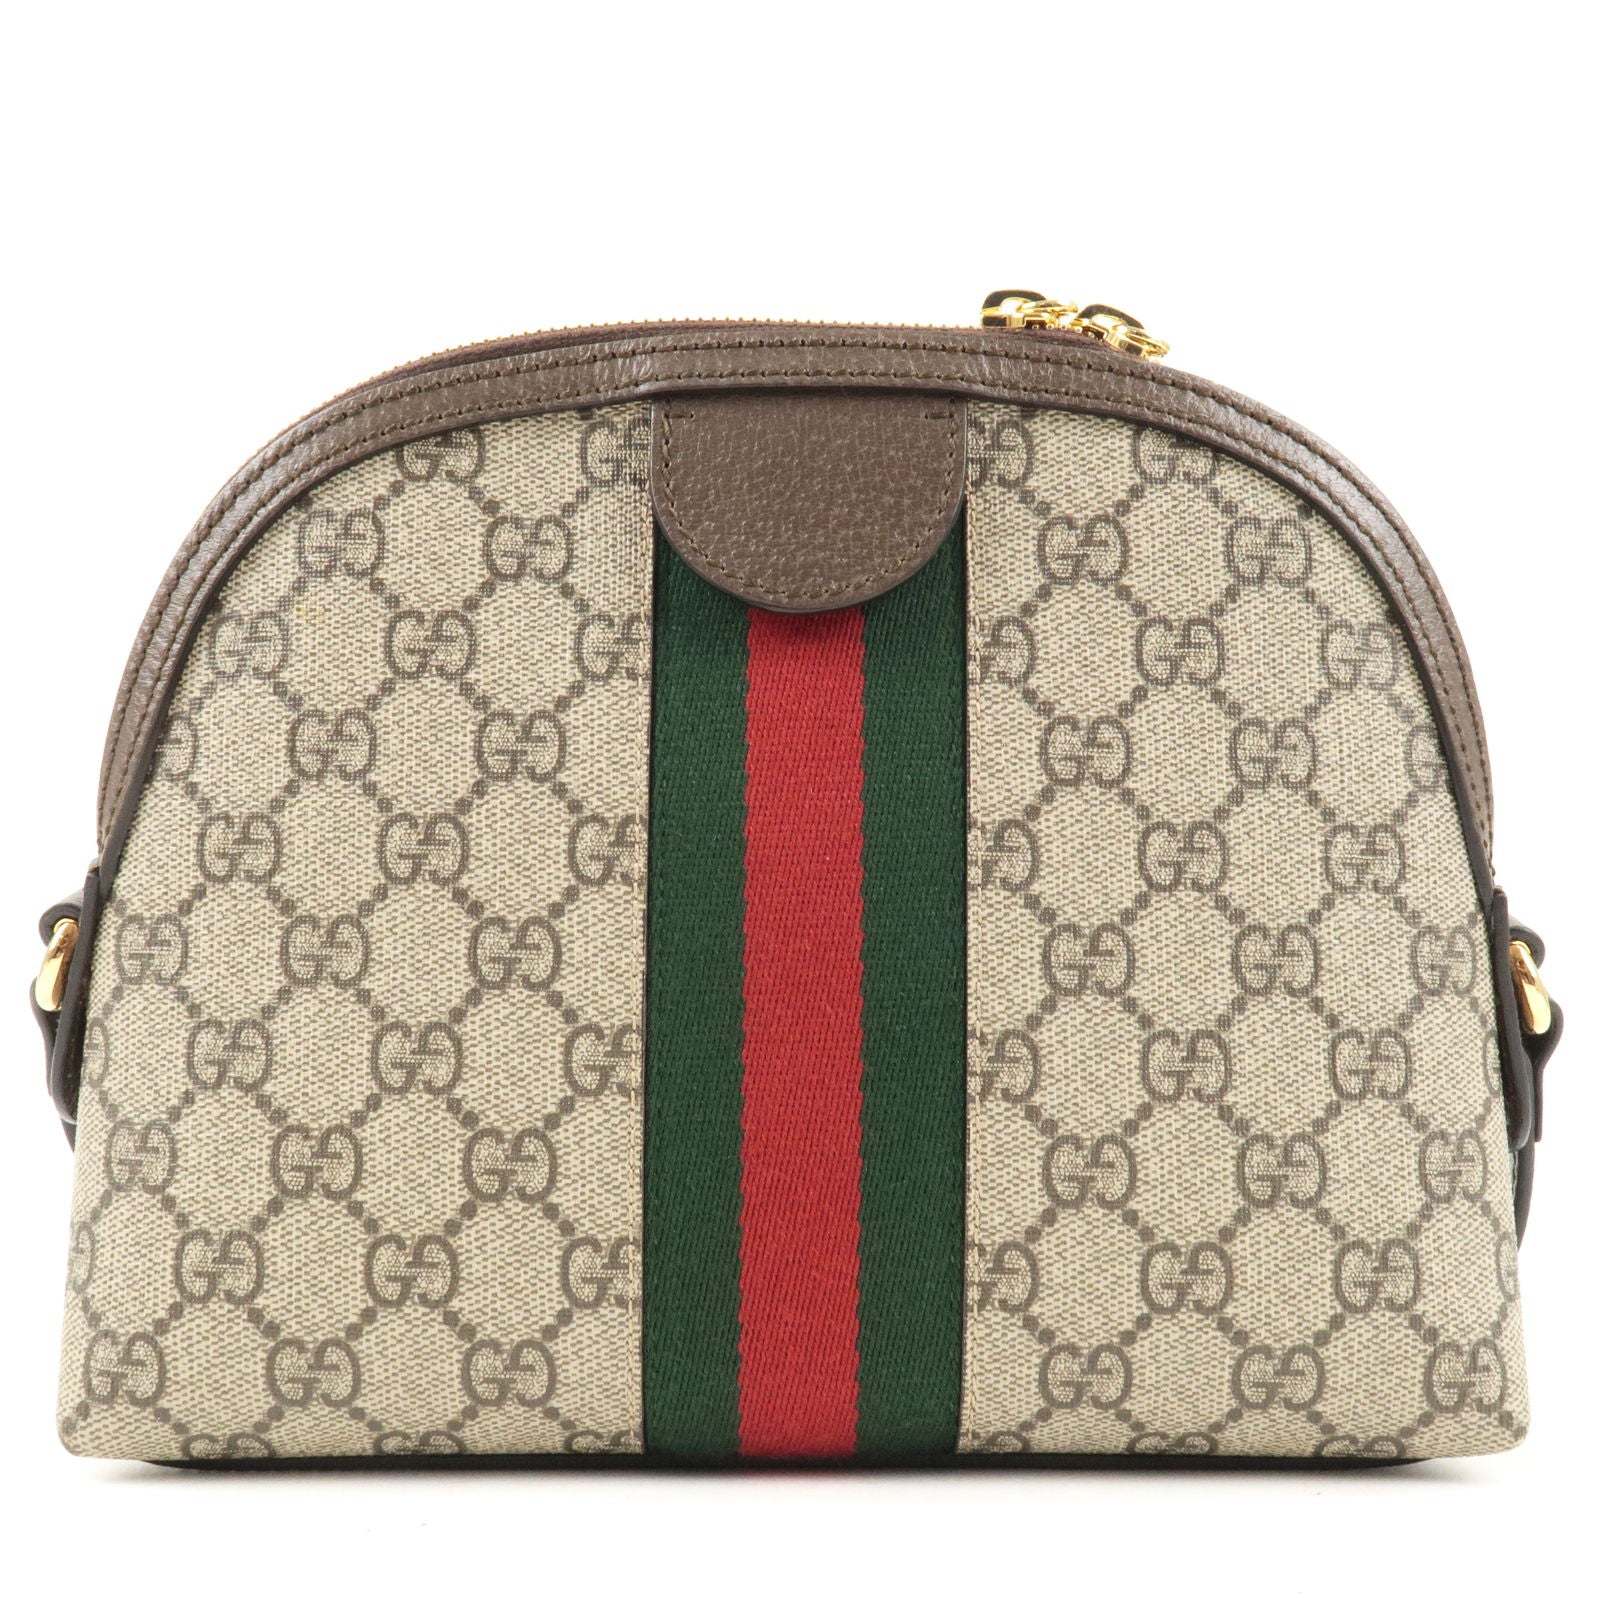 Gucci Ophidia GG Mini Shoulder Bag Good condition Complete set Idr